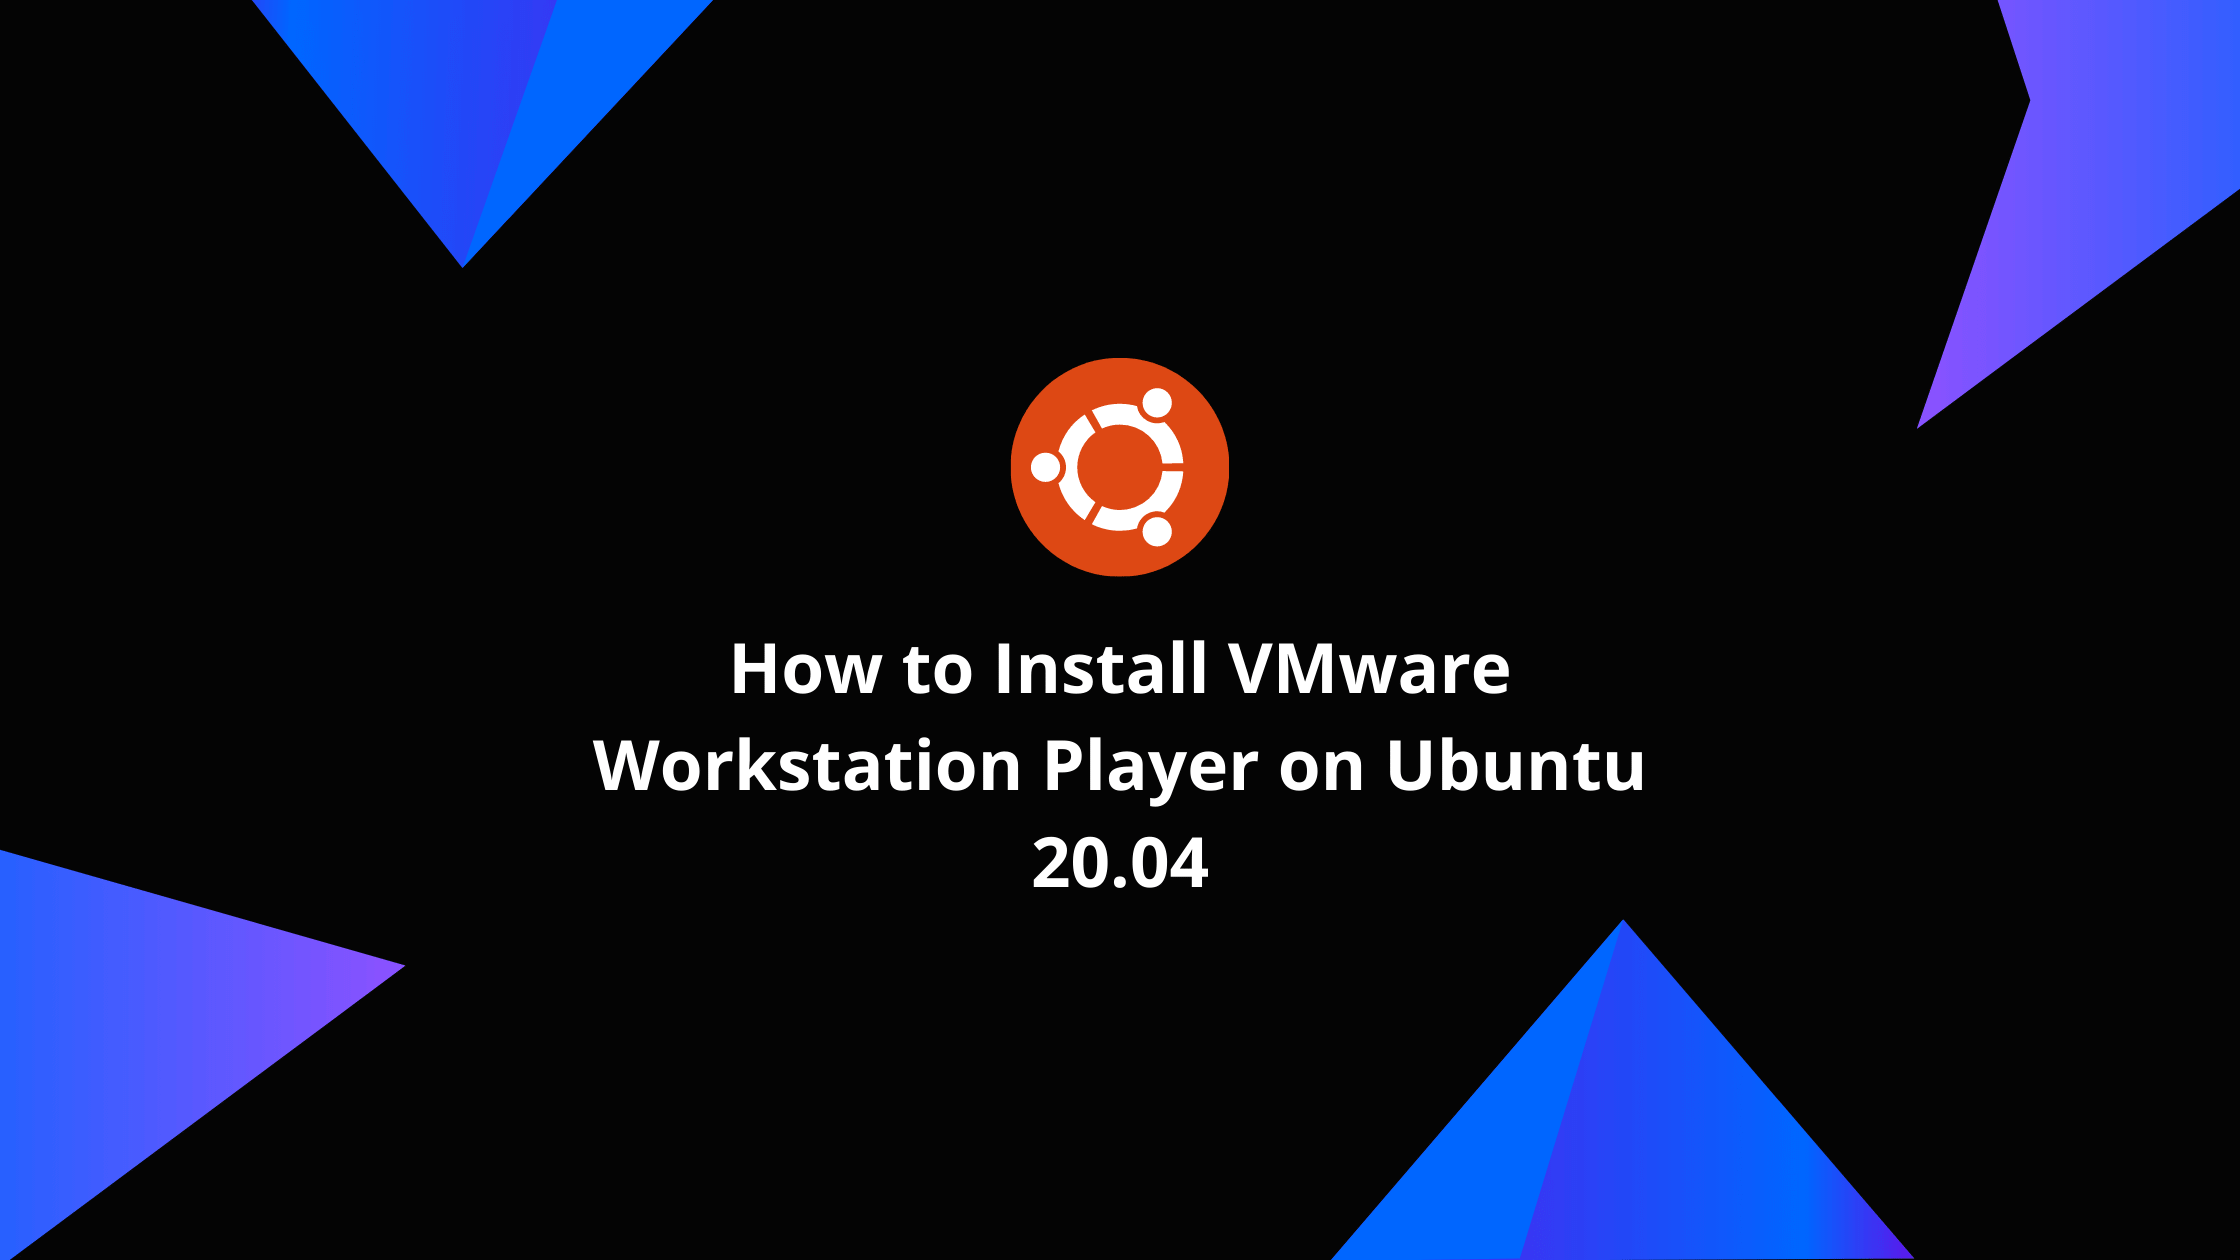 download ubuntu for vmware workstation player